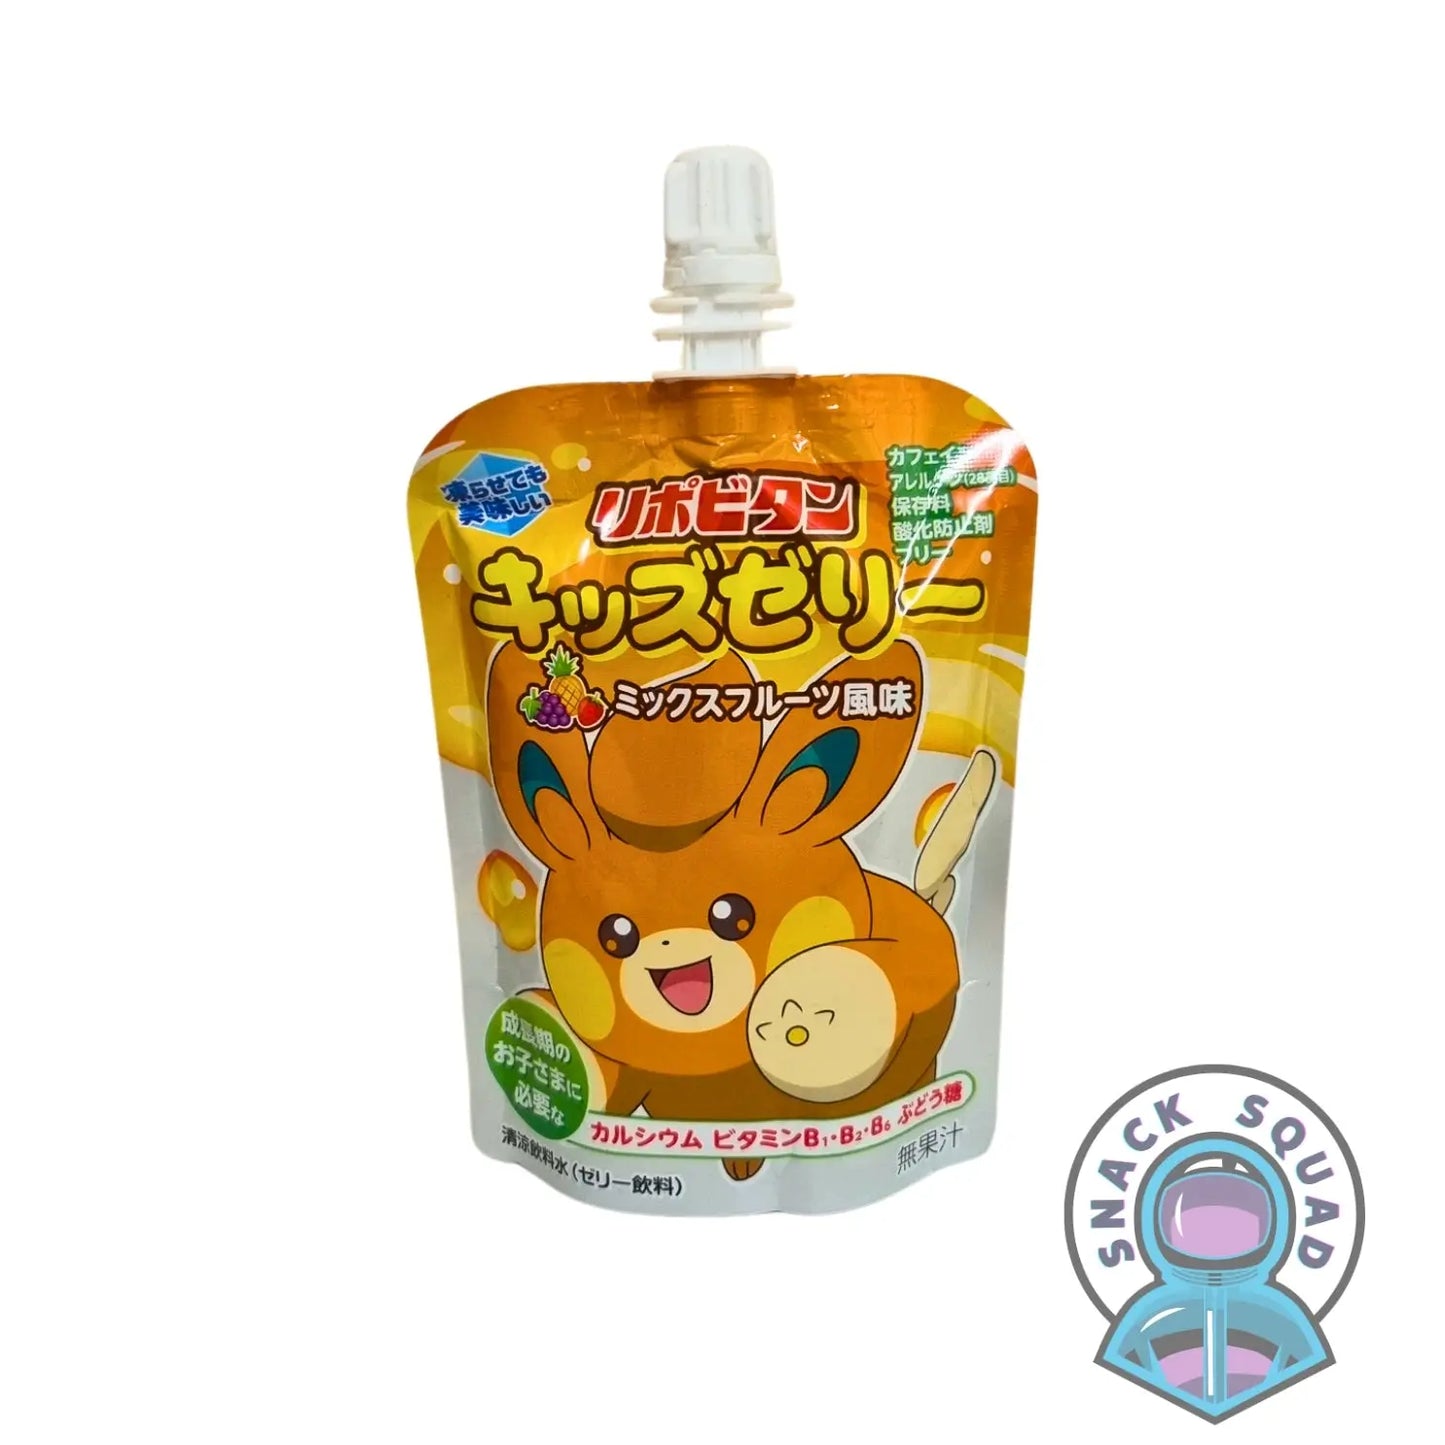 Taisho Pokemon Lipovitan Jelly Mixed Fruit 125g (Japan) Snack Squad